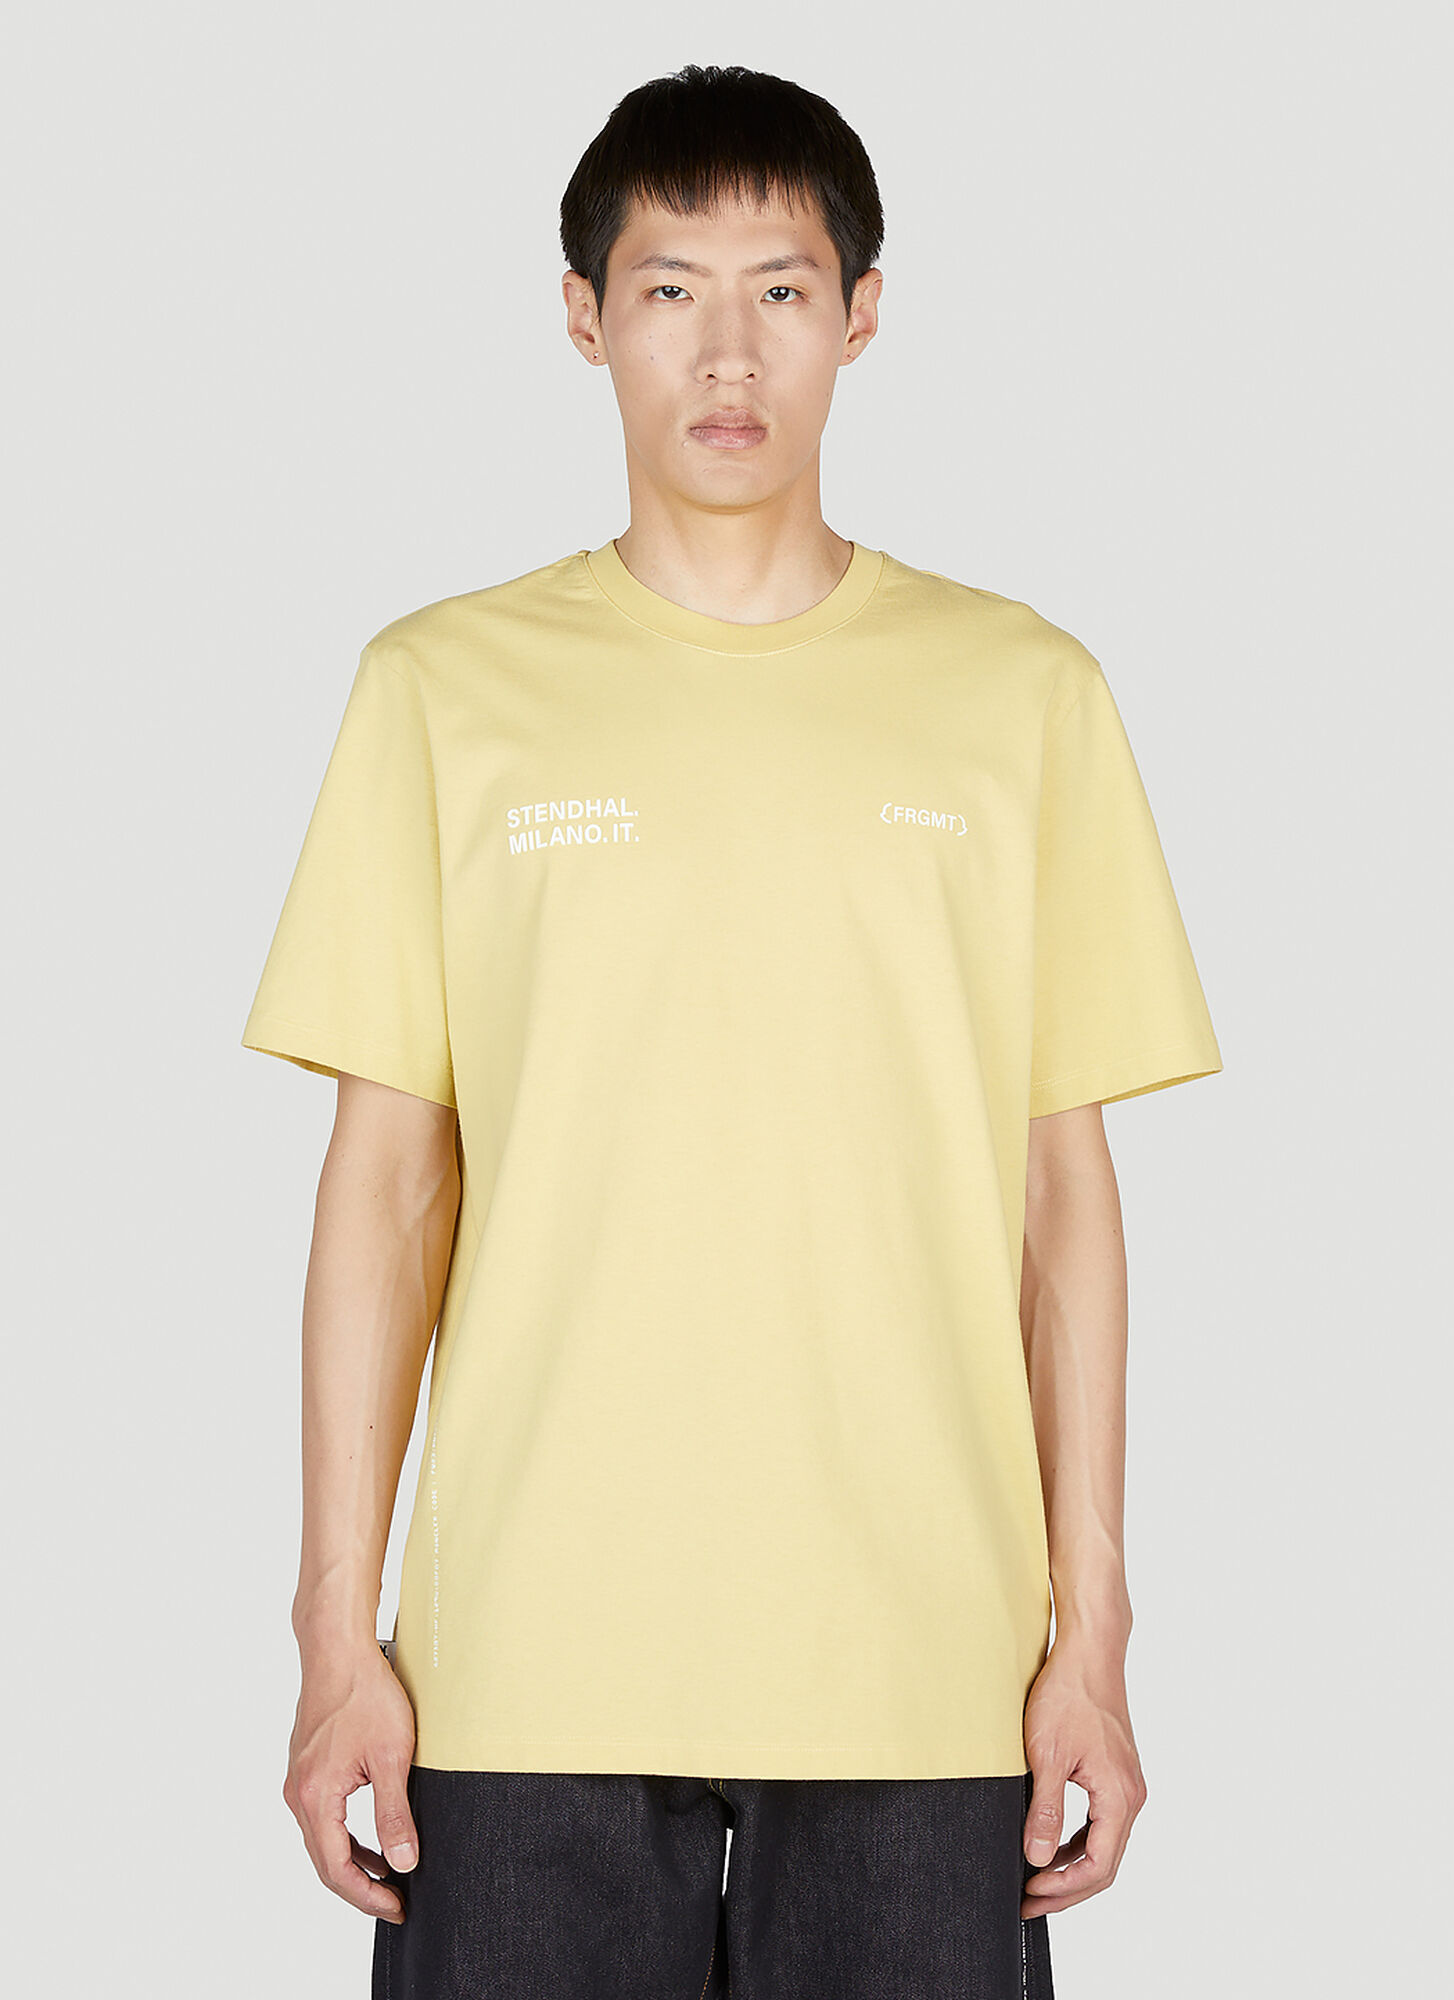 Moncler Genius Ss T-shirt In Yellow